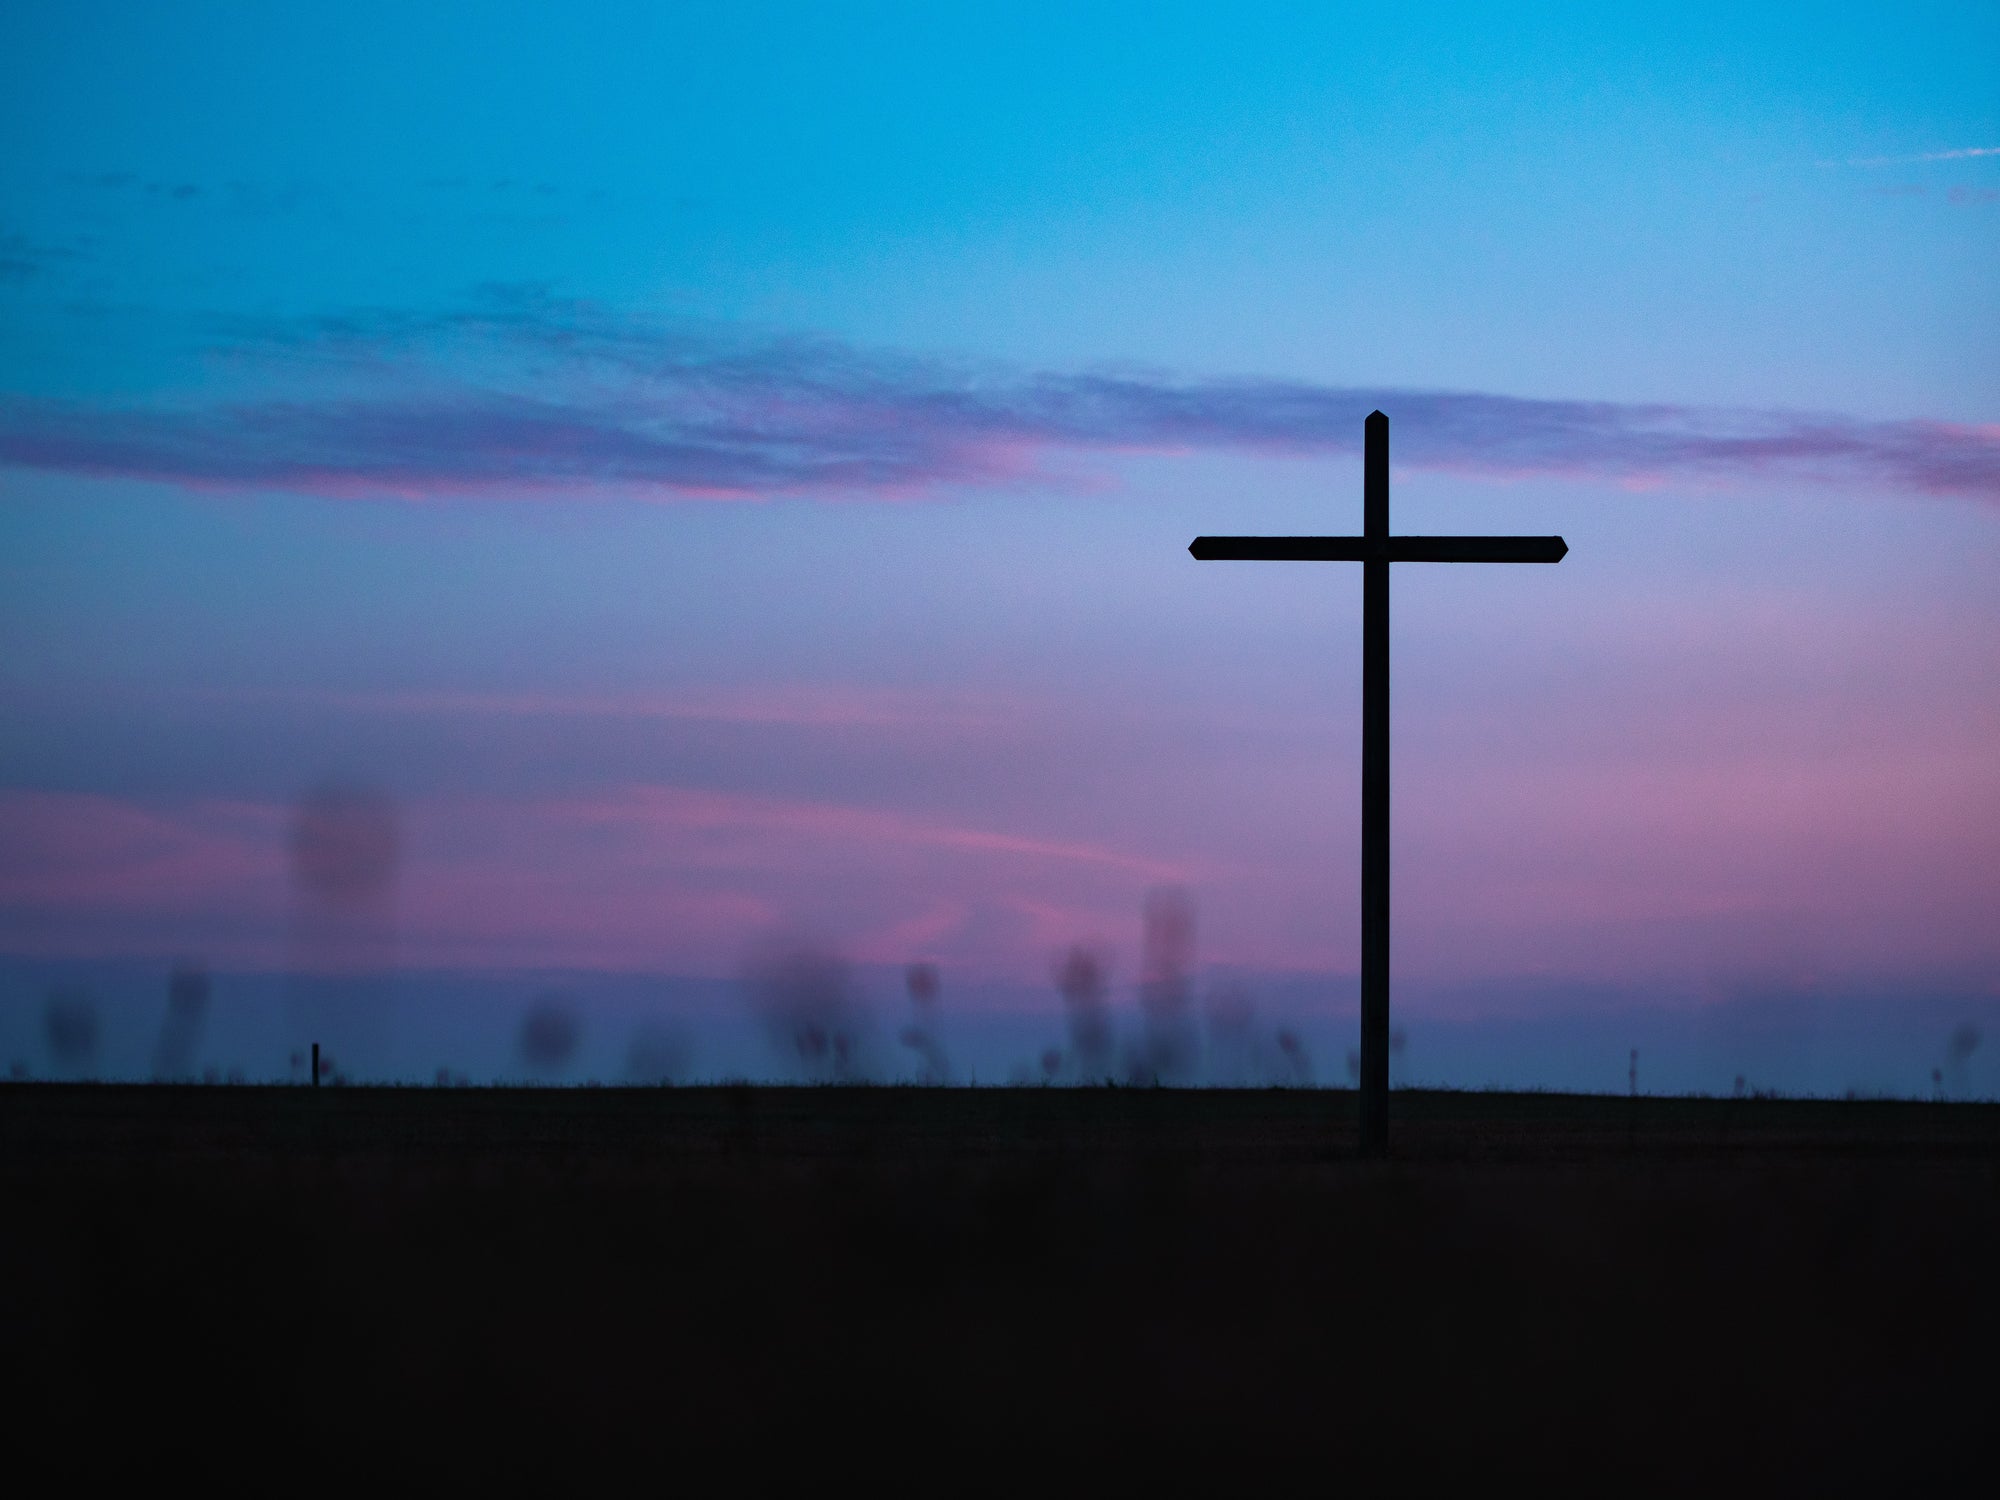 a large cross at dusk, representing the Catholic faith